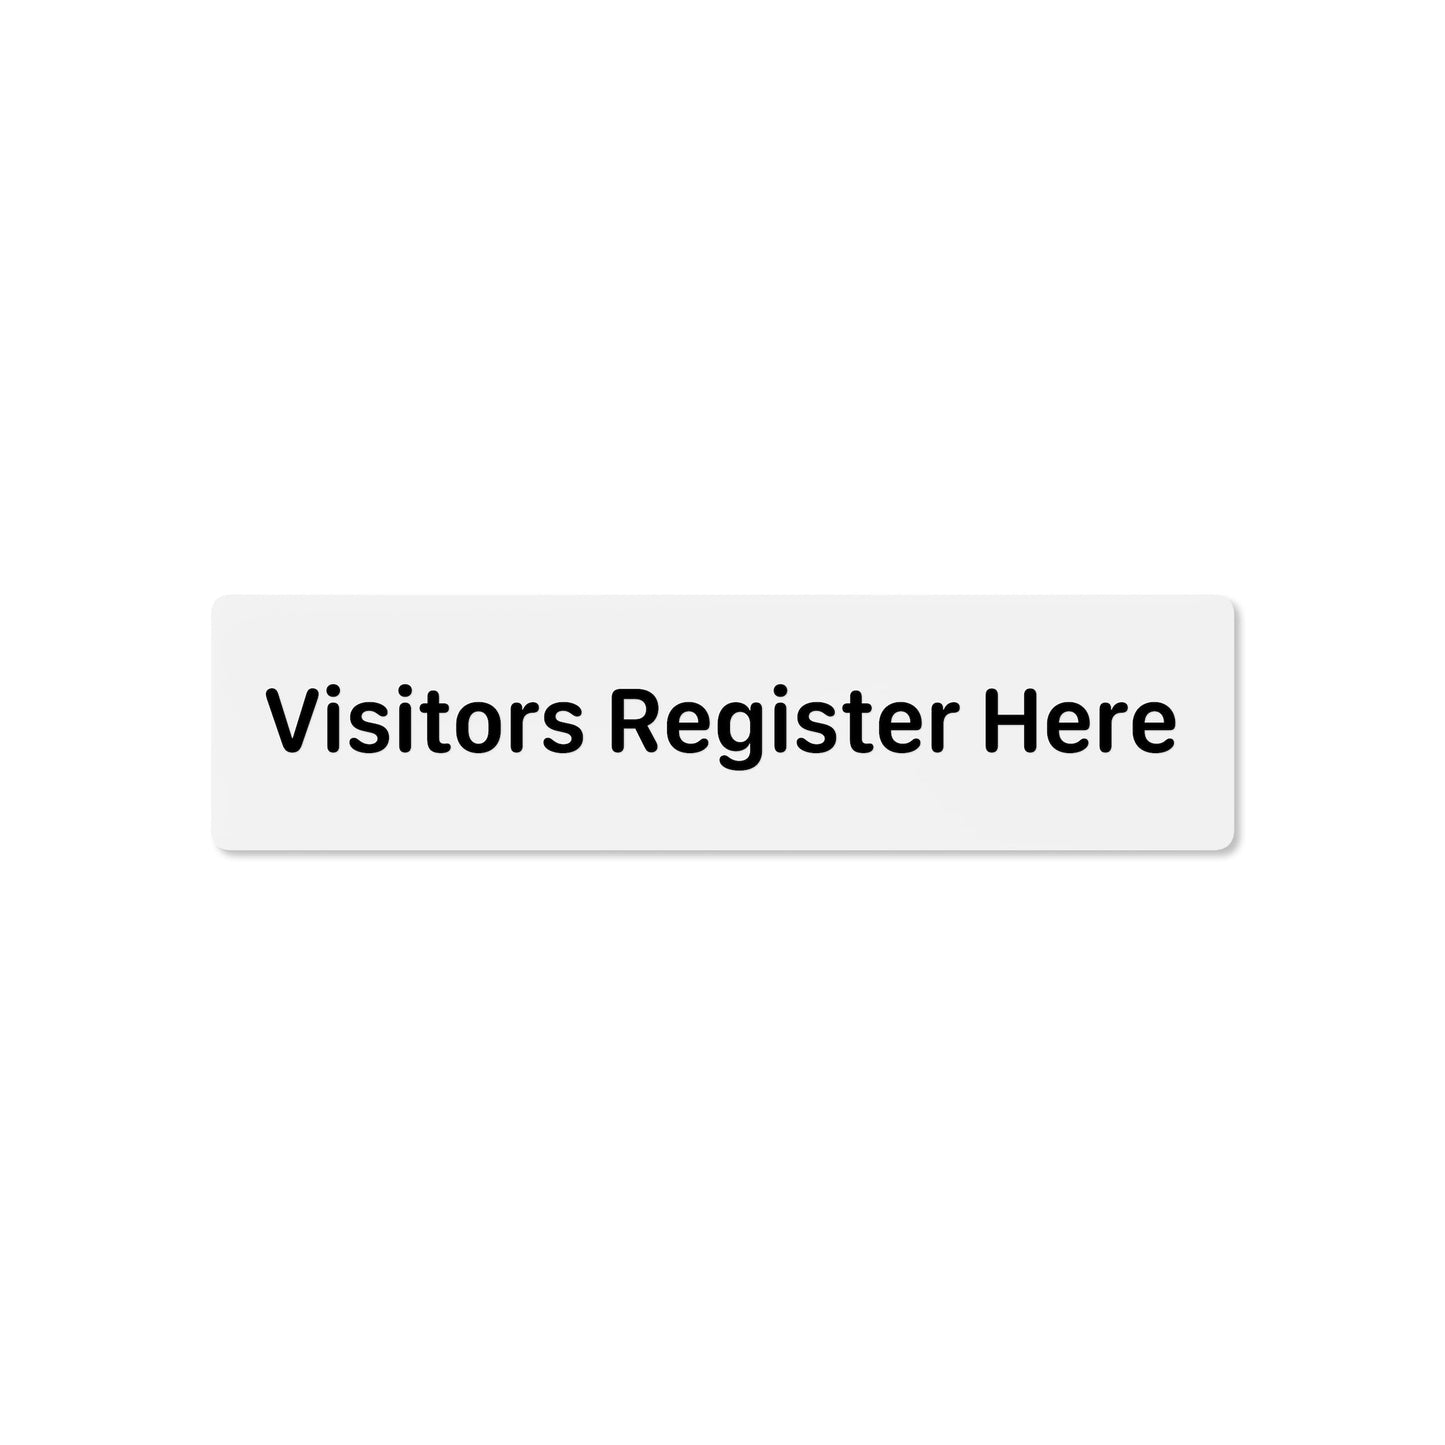 Visitors Register Here